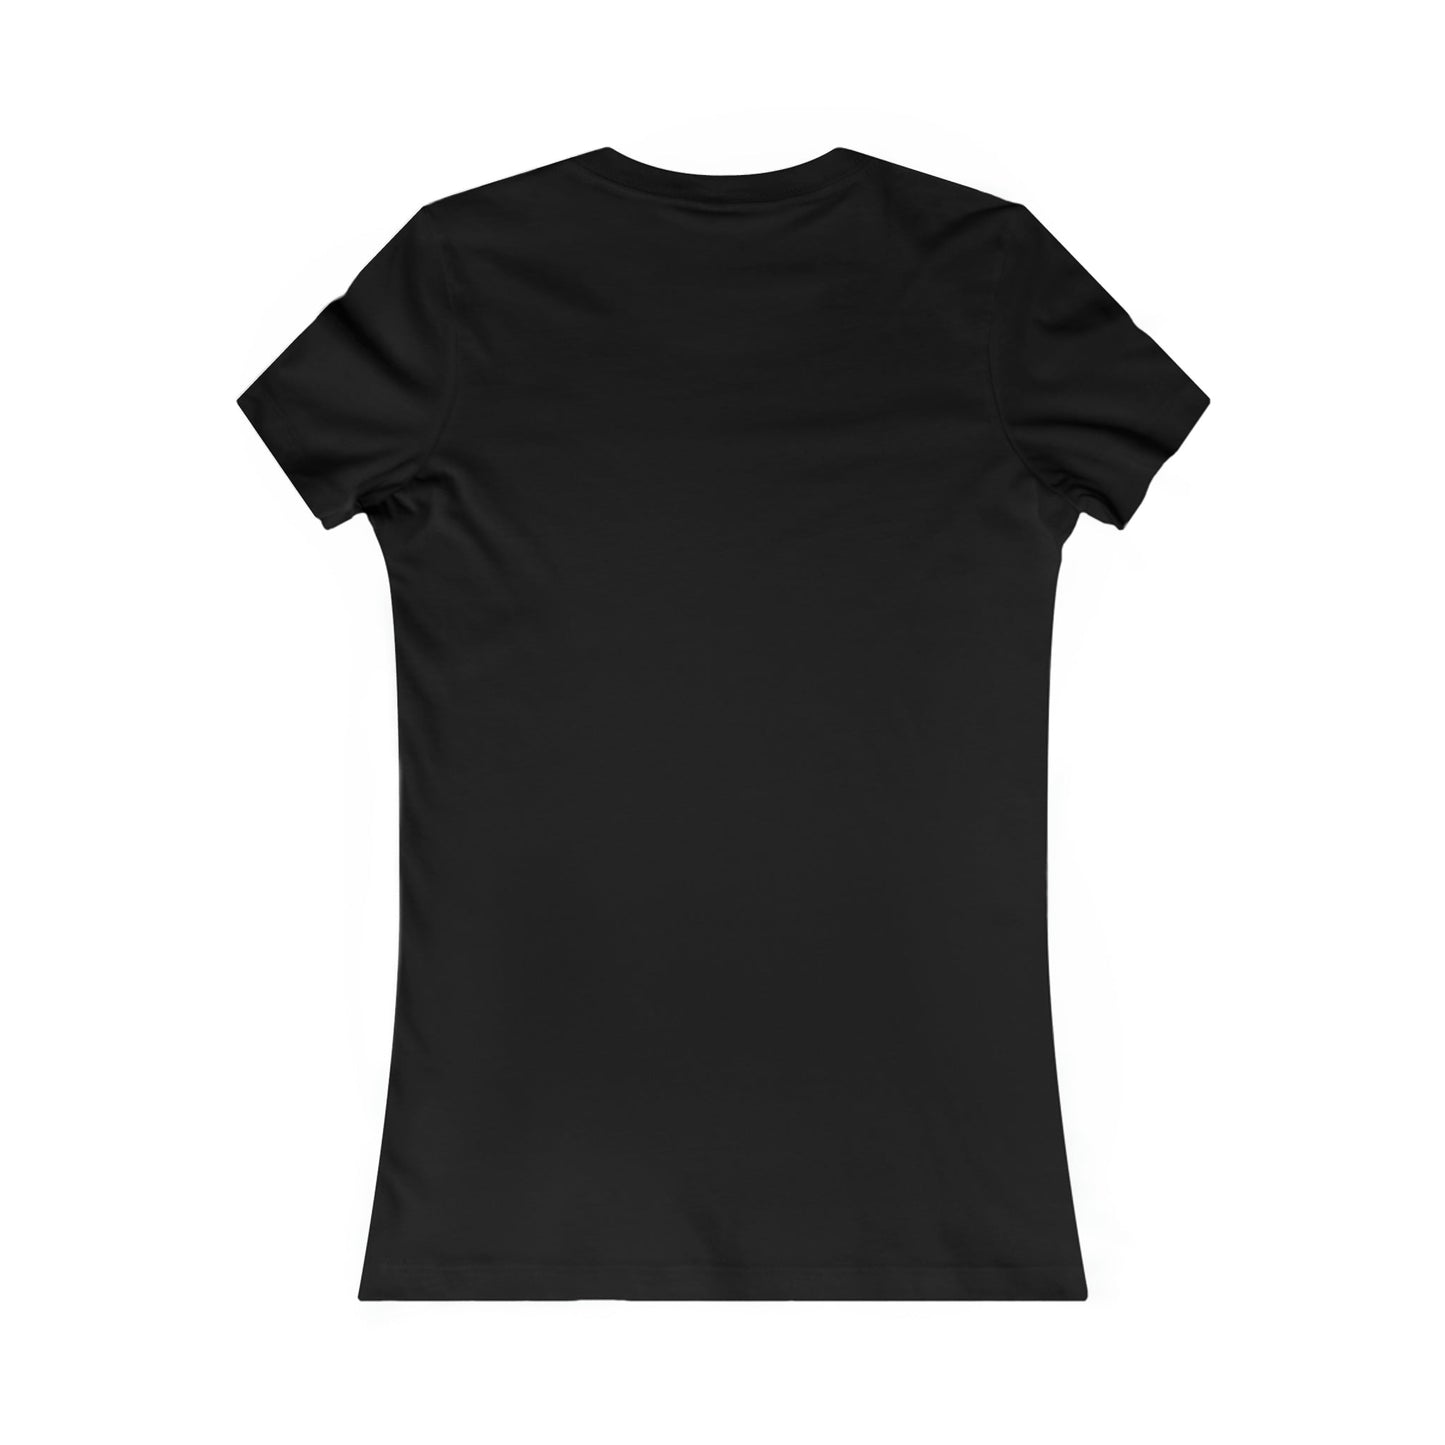 Printify T-Shirt Dagaz Rune V.K.N.G™ T-shirt Girly Cut